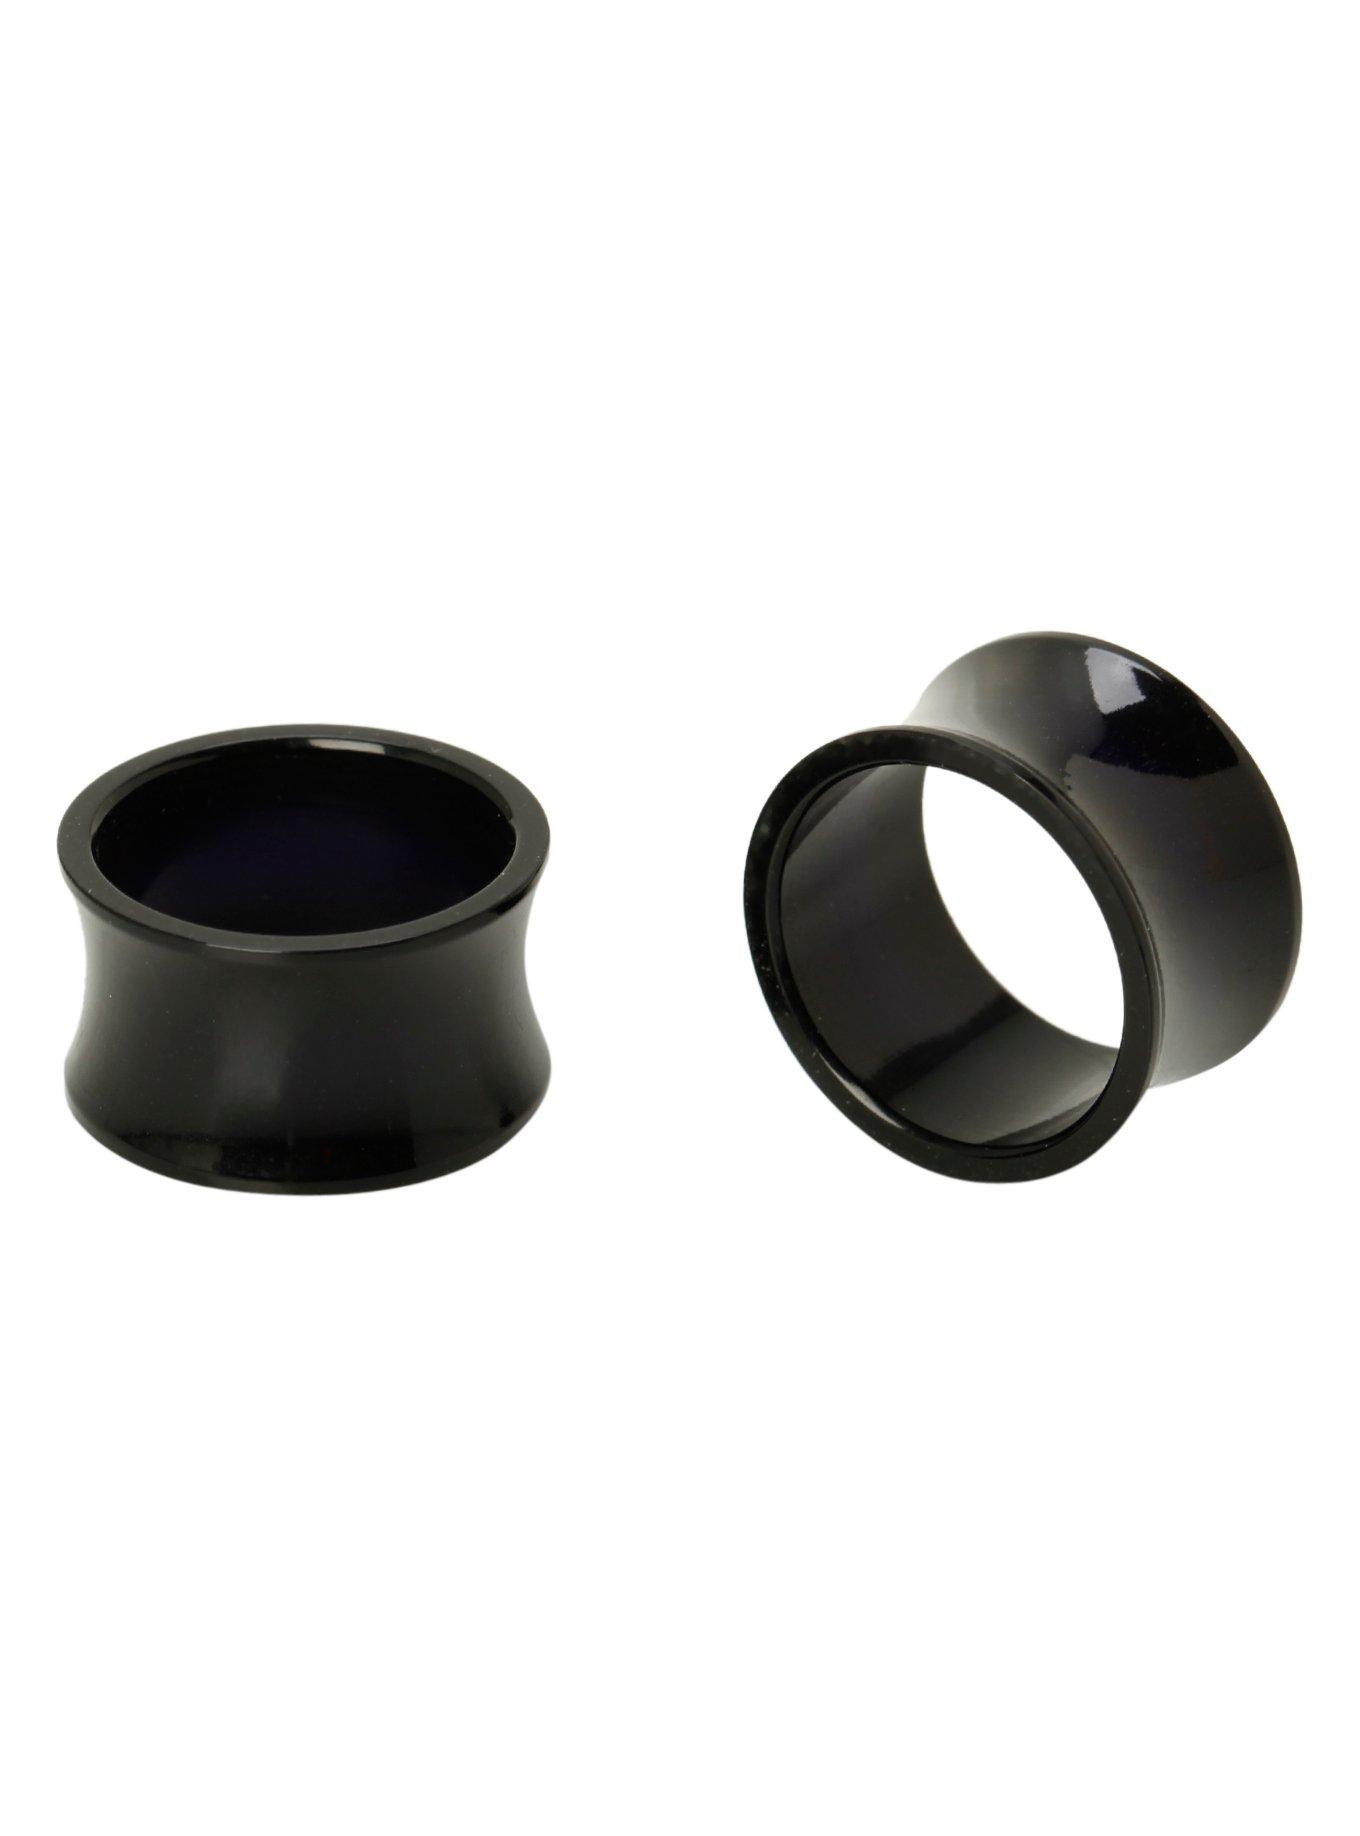 Acrylic Black Thin Wall Eyelet Plug 2 Pack, BLACK, hi-res